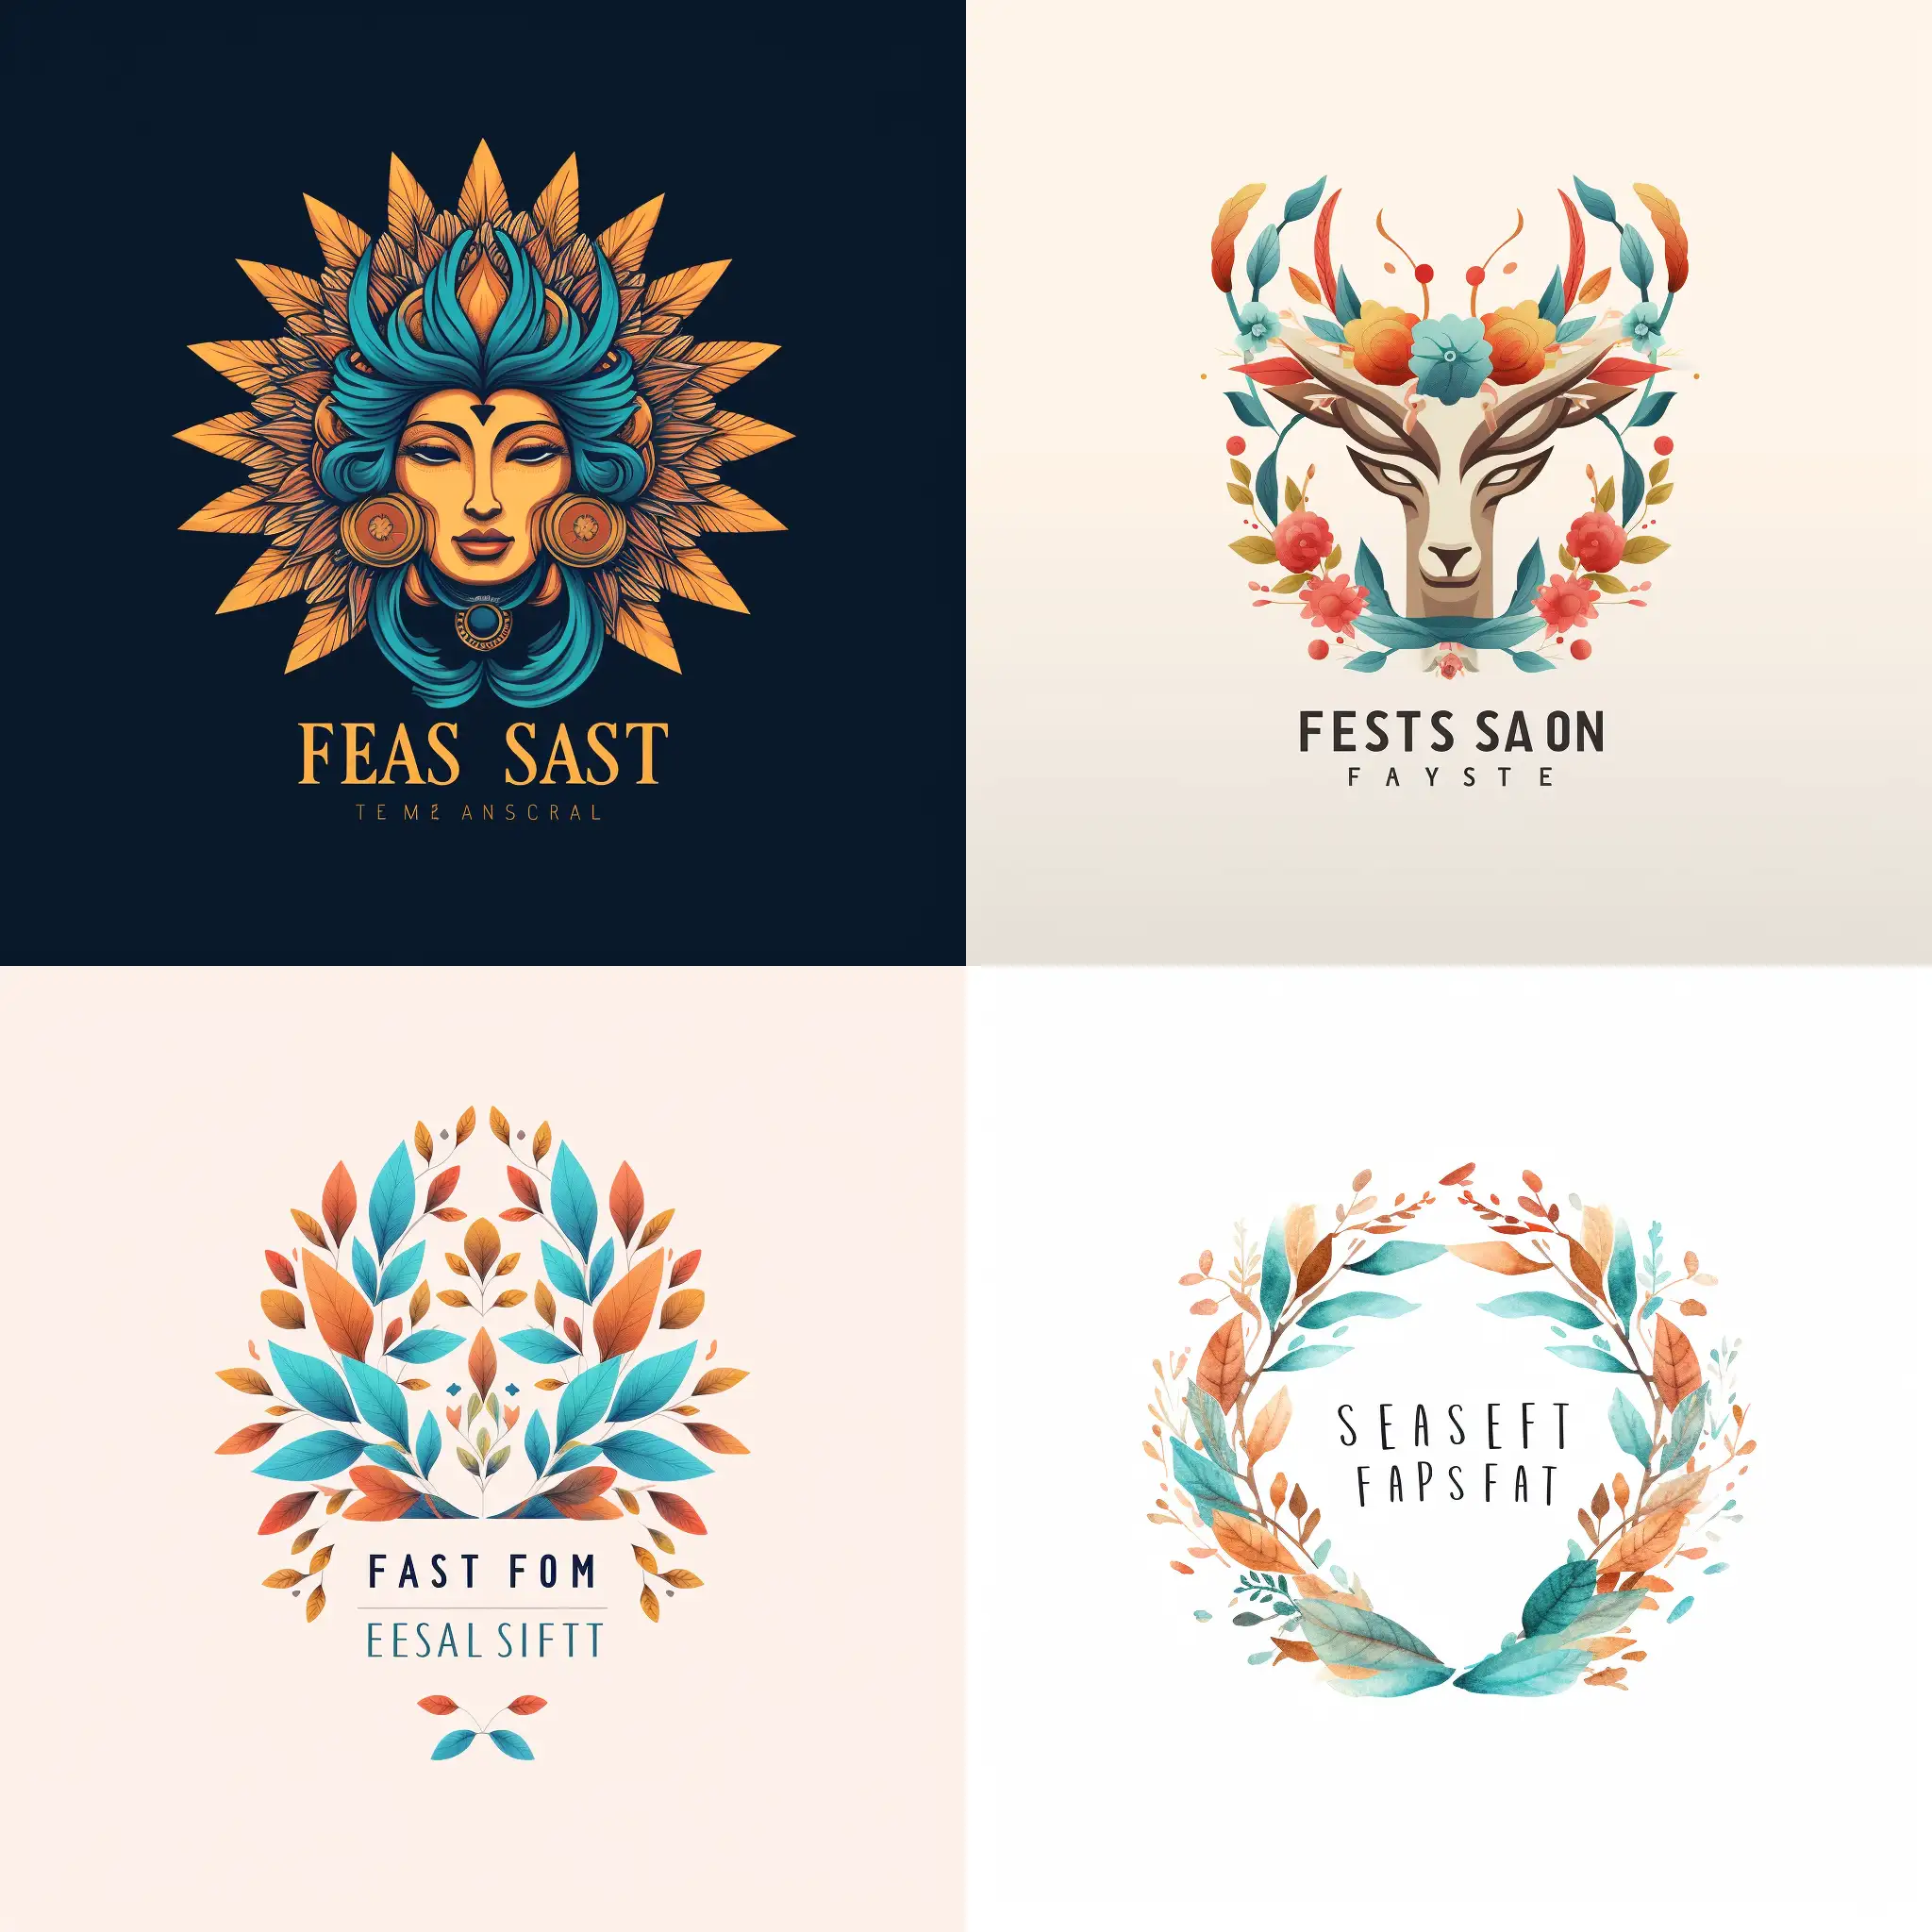 create a logo for a festival competition called "art season fest".